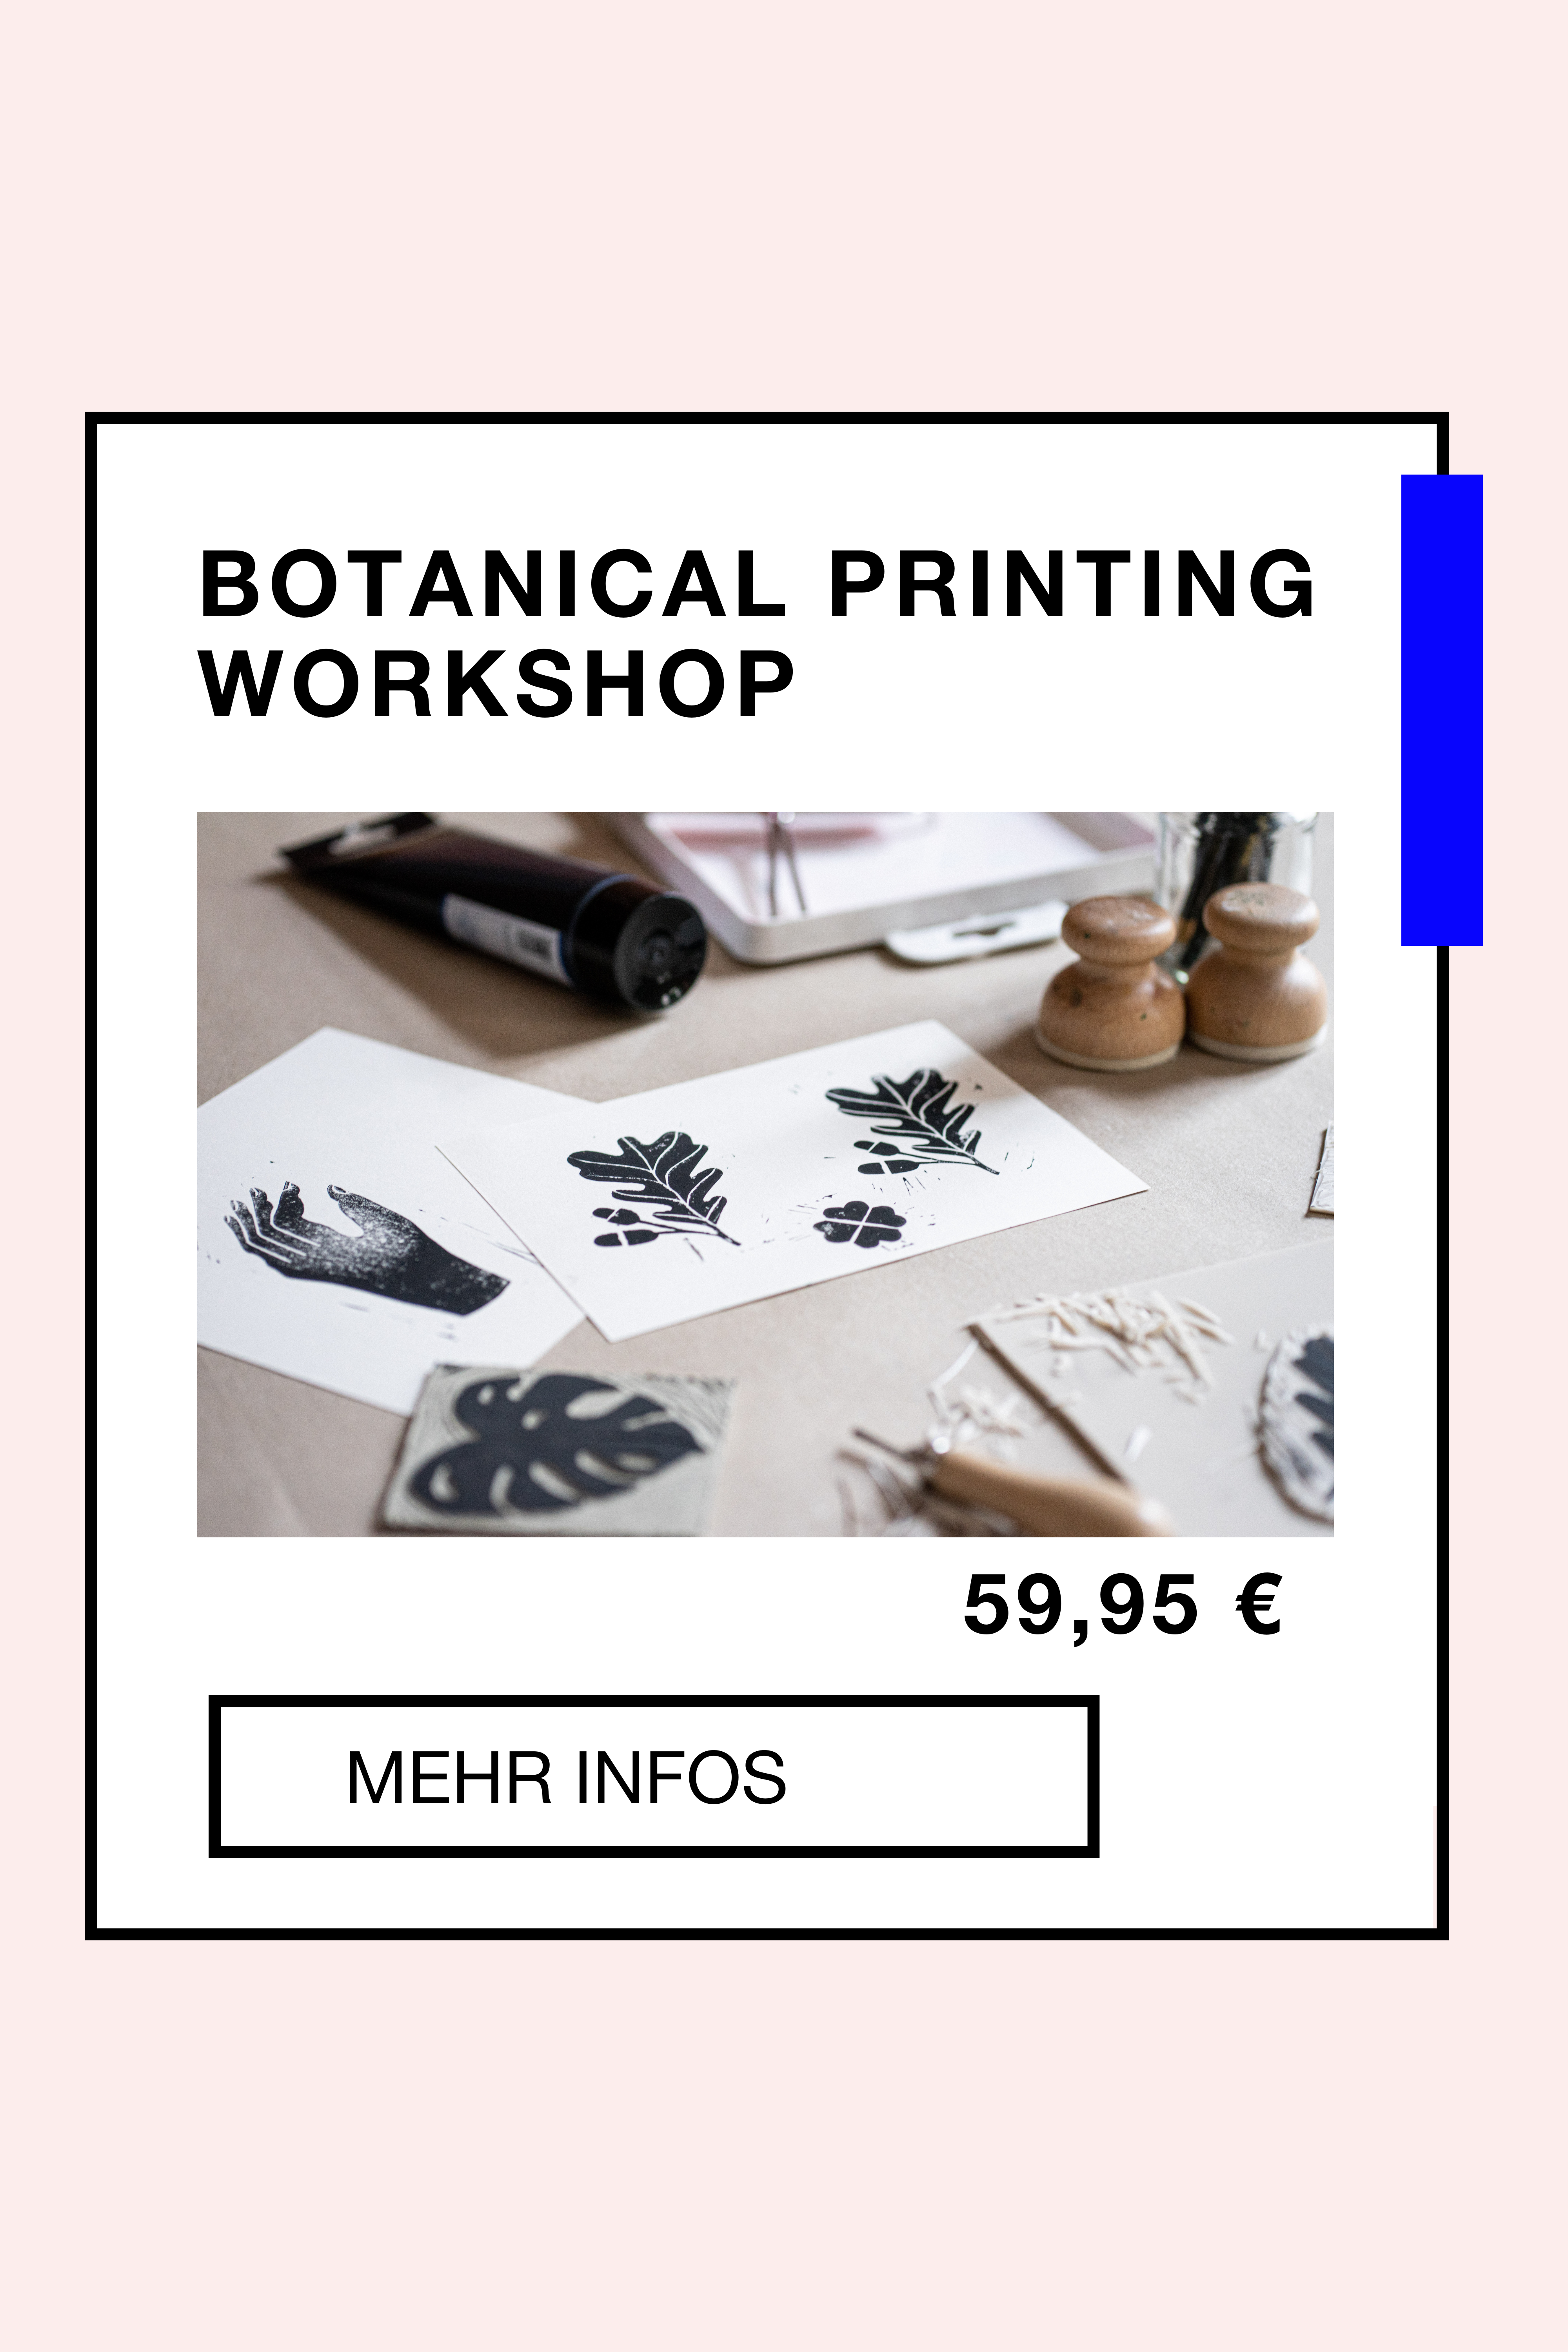 botanical printing, linoldruck, linolschnitt, workshop, leipzig